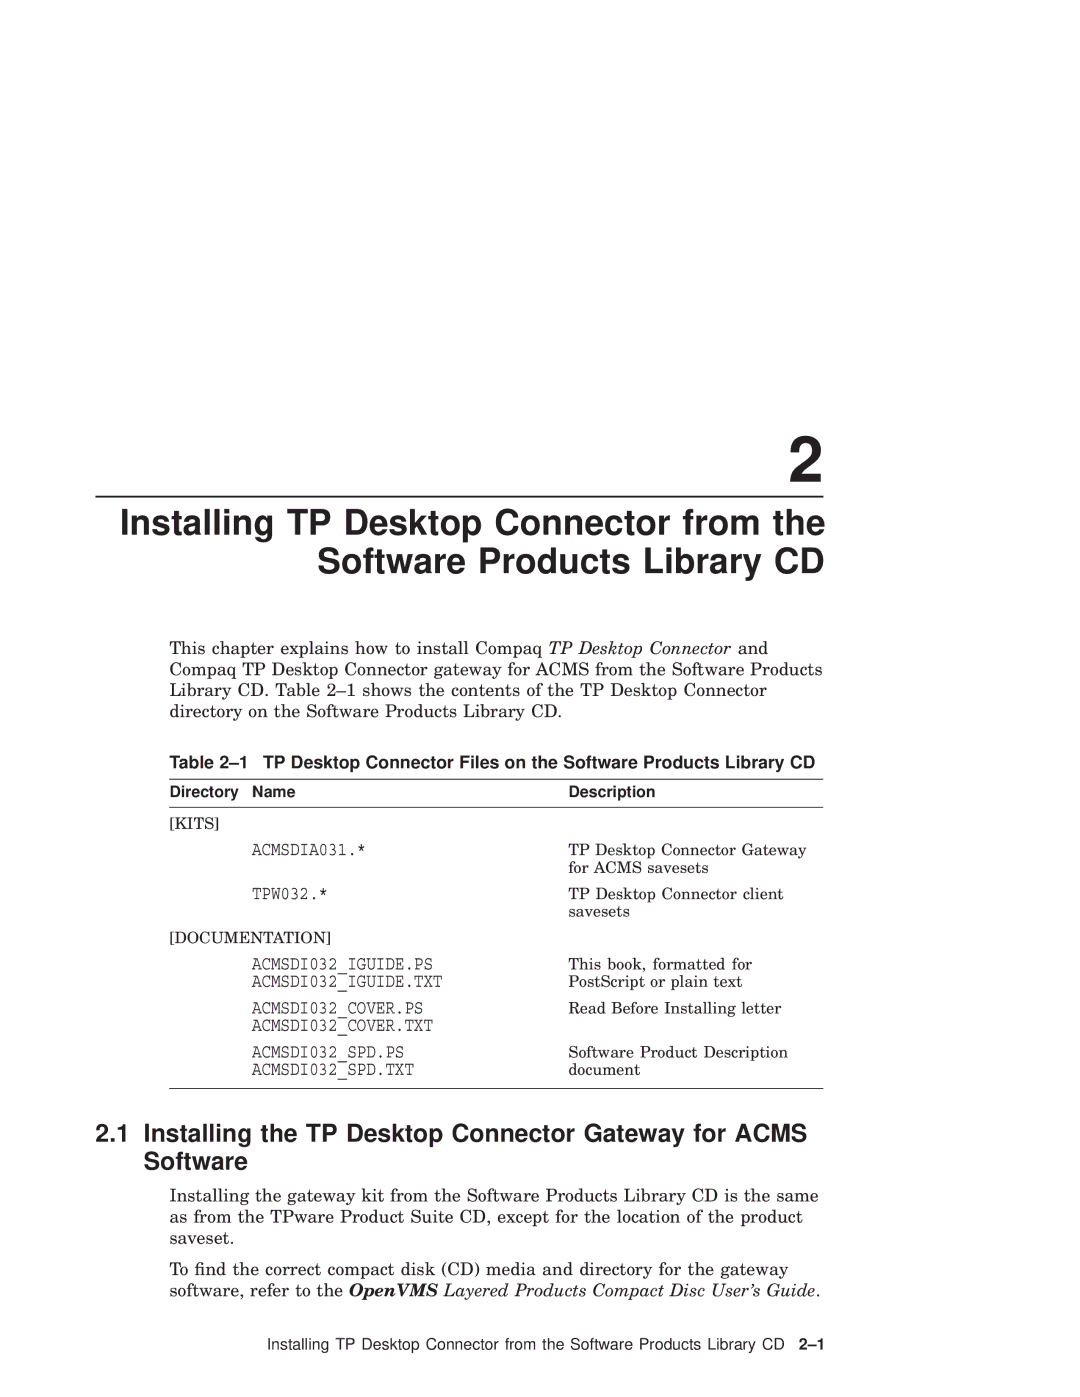 Compaq AAPG9DKTE manual ACMSDIA031, Directory Name Description 